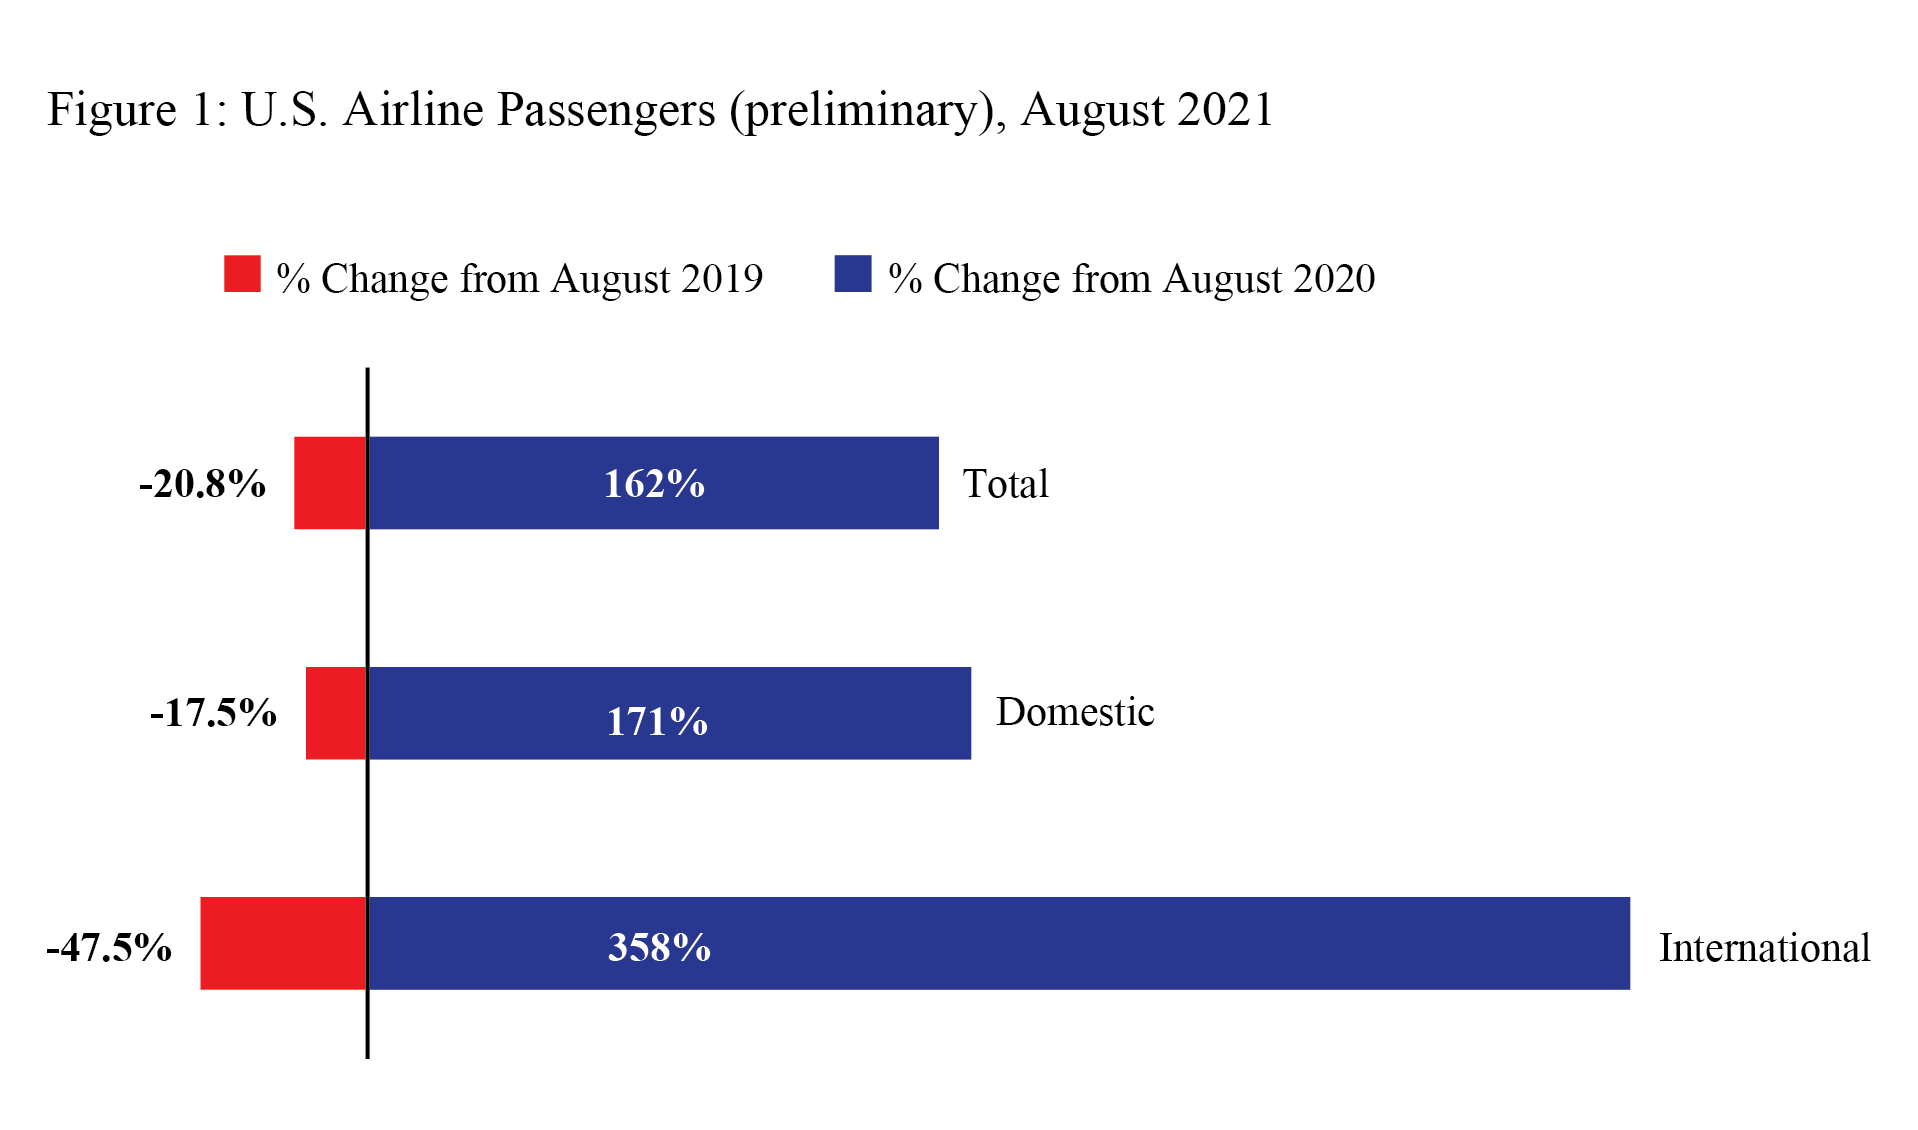 August 2021 Preliminary Passenger Figure 1